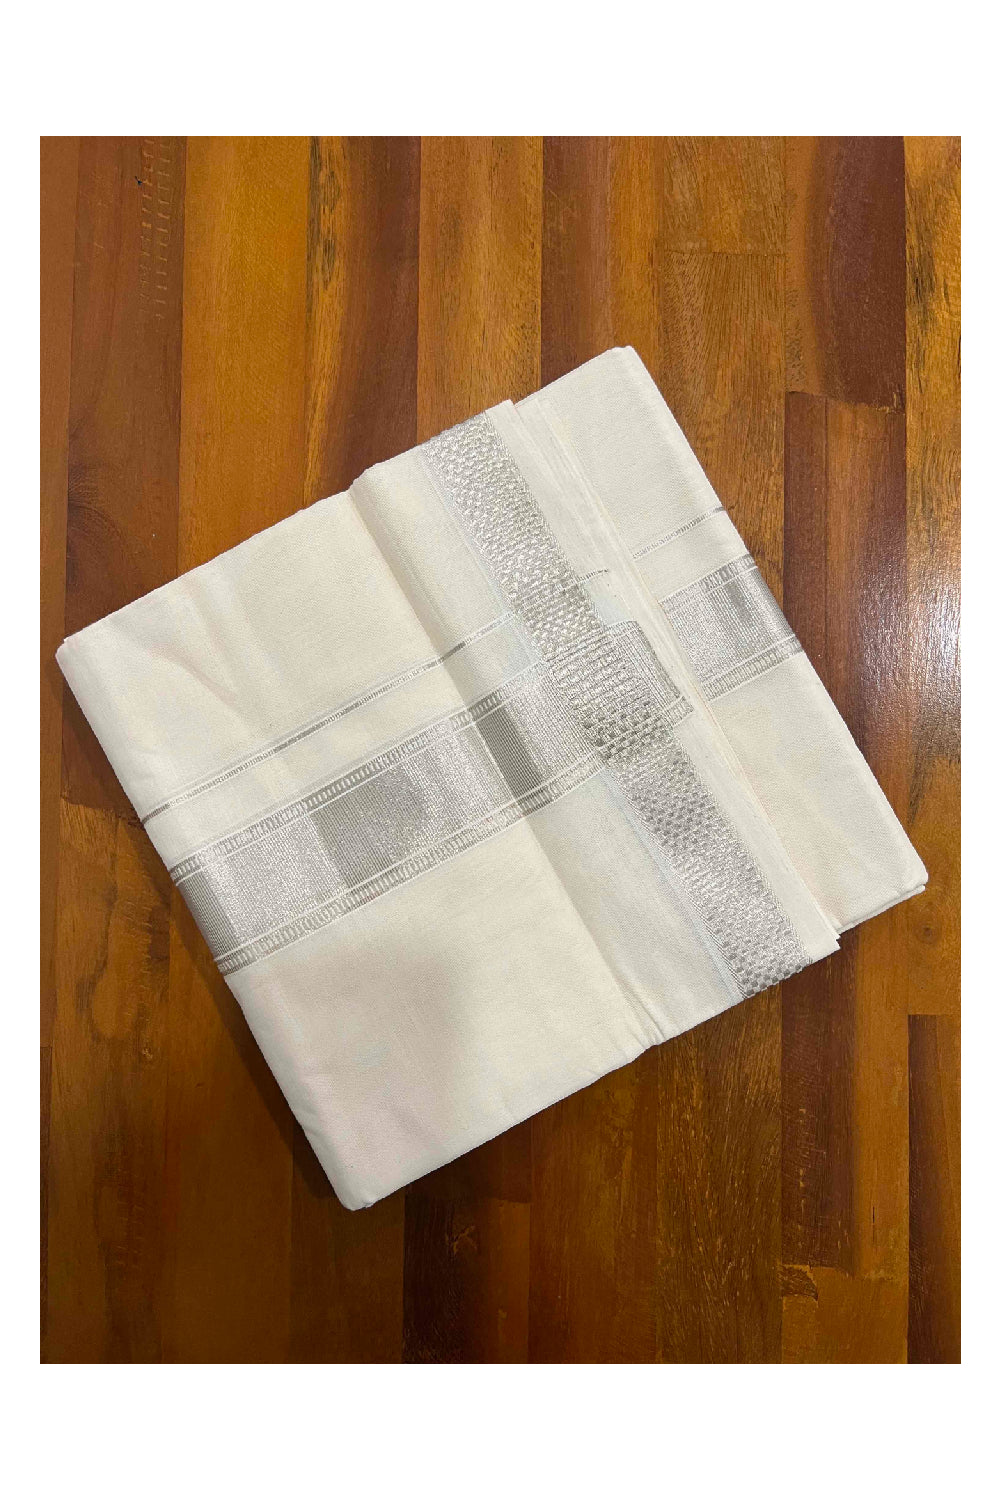 Southloom Balaramapuram Handloom Pure Cotton Mundu with Silver Kasavu Design Kara (South Indian Dhoti)